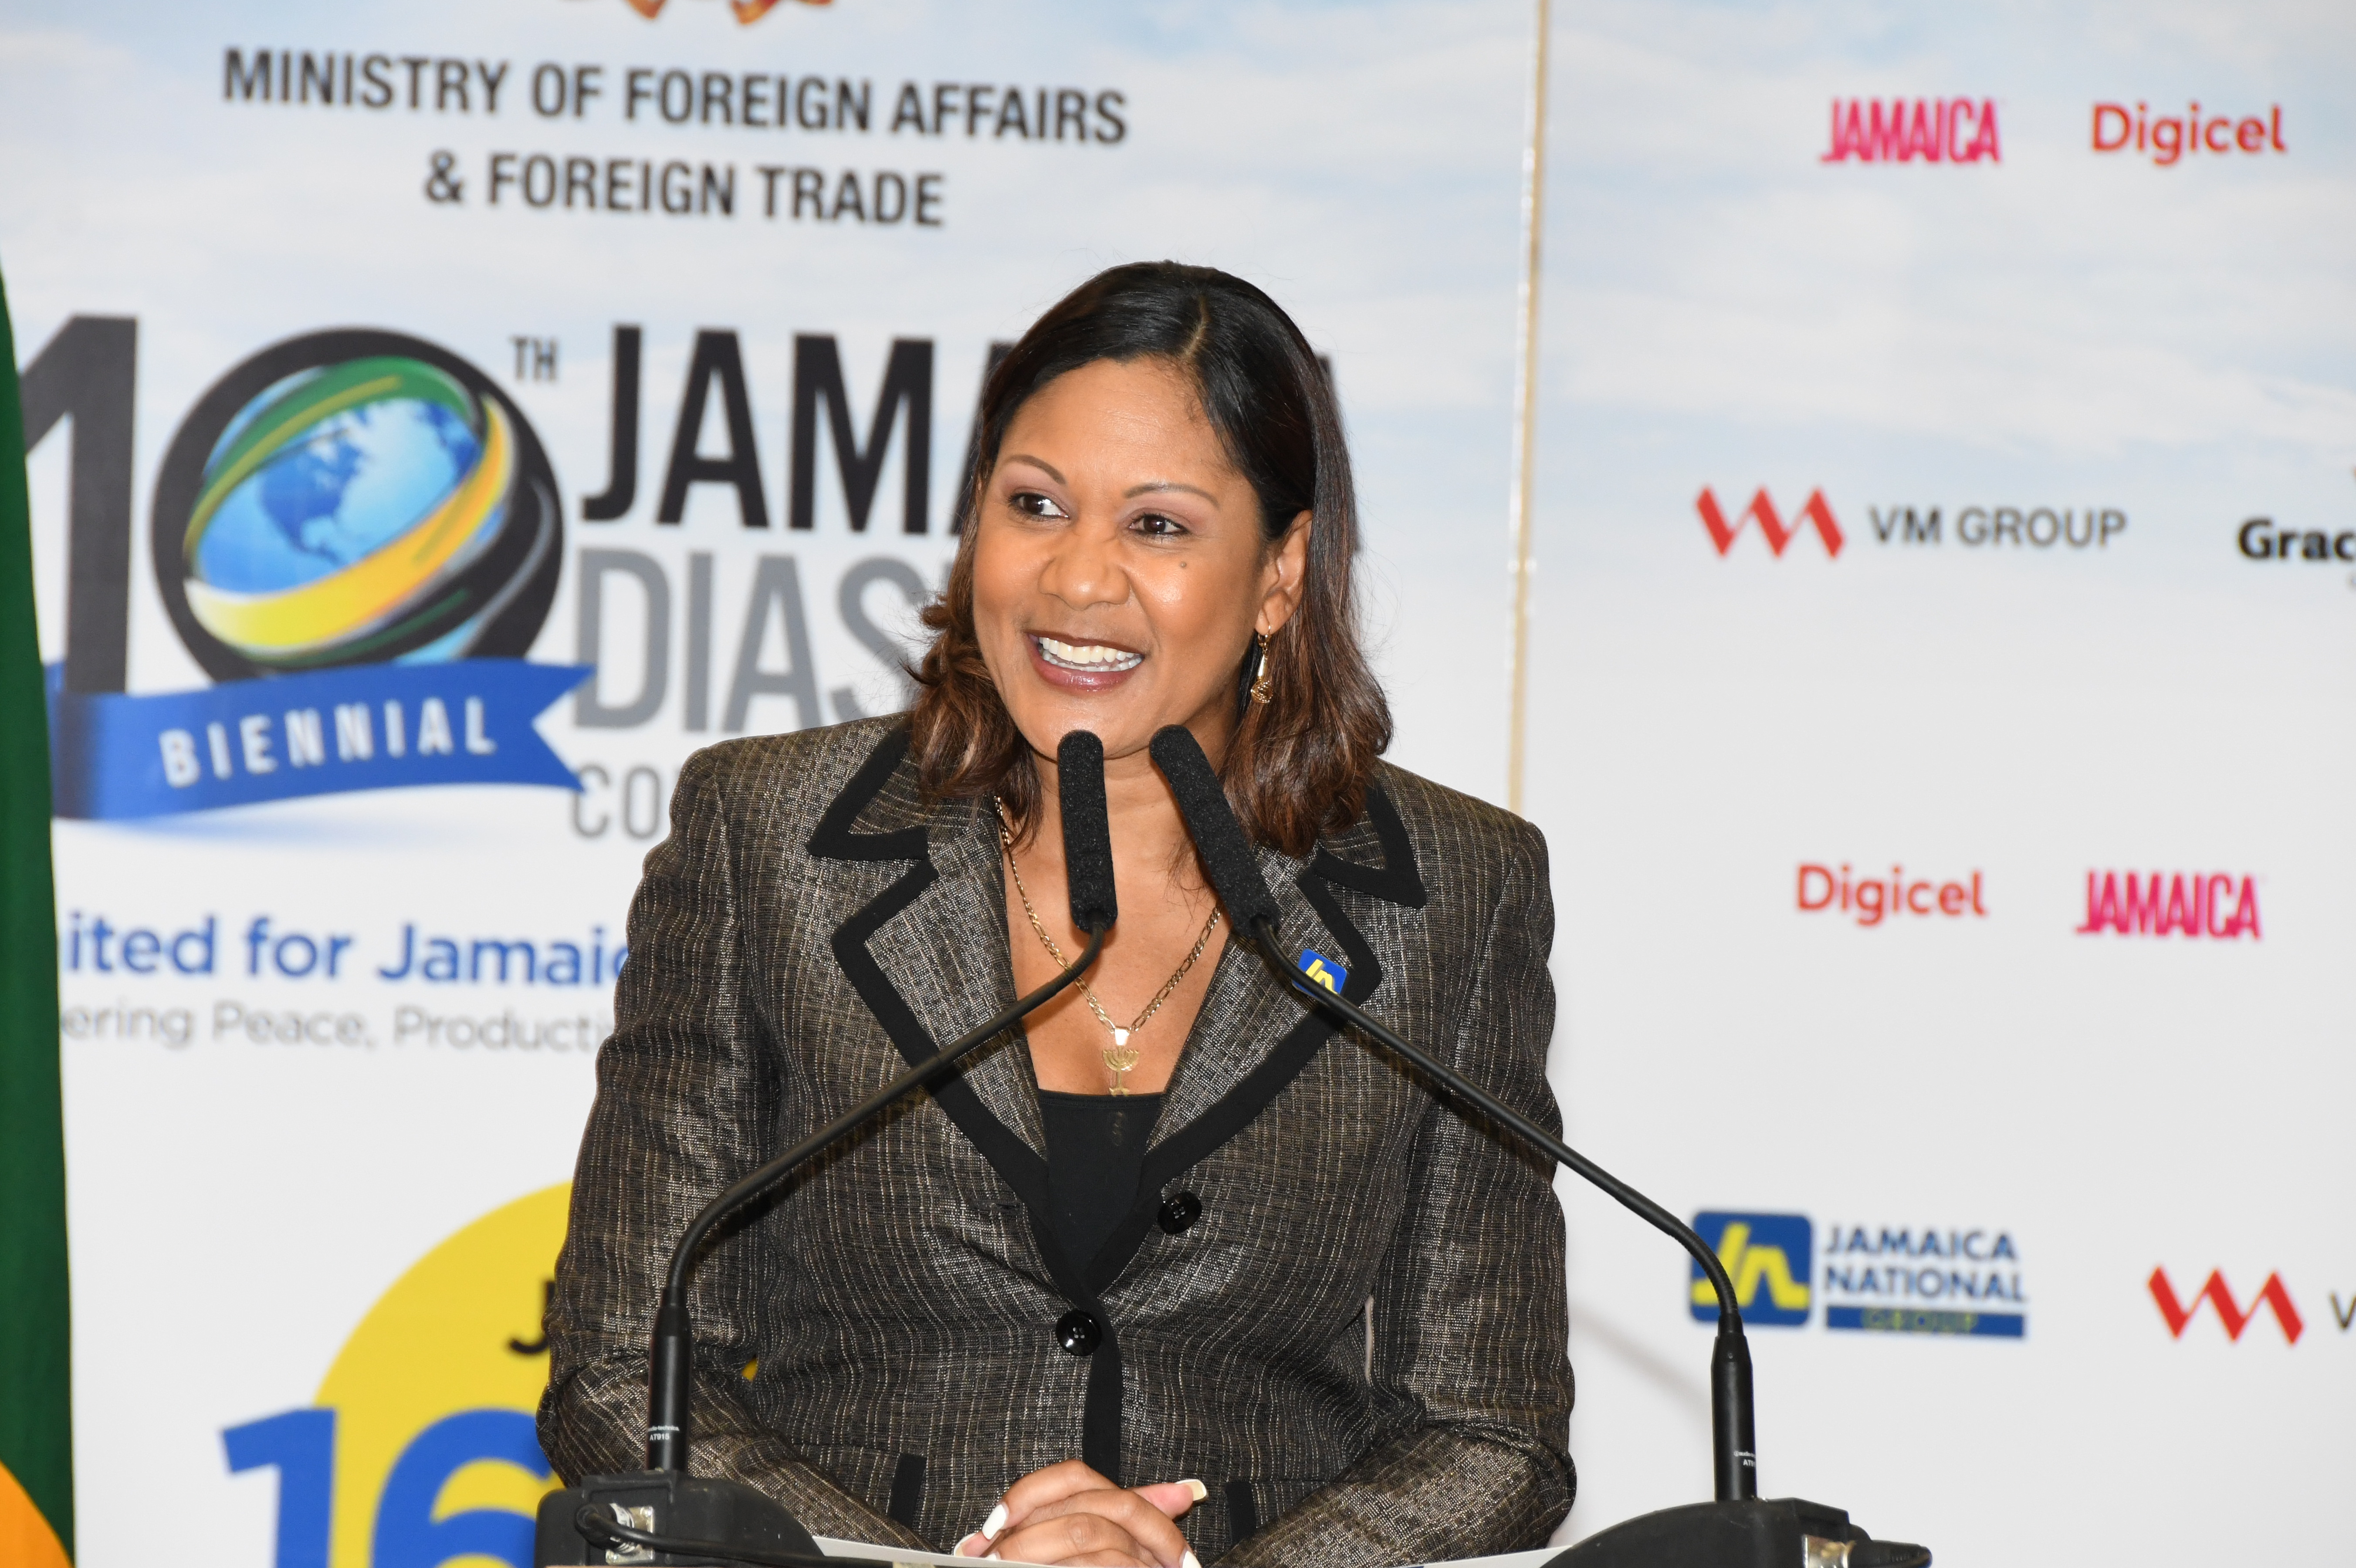 Leesa Kow, managing director, JN Bank addressing the launch of the 10th Biennial Jamaica Diaspora Conference